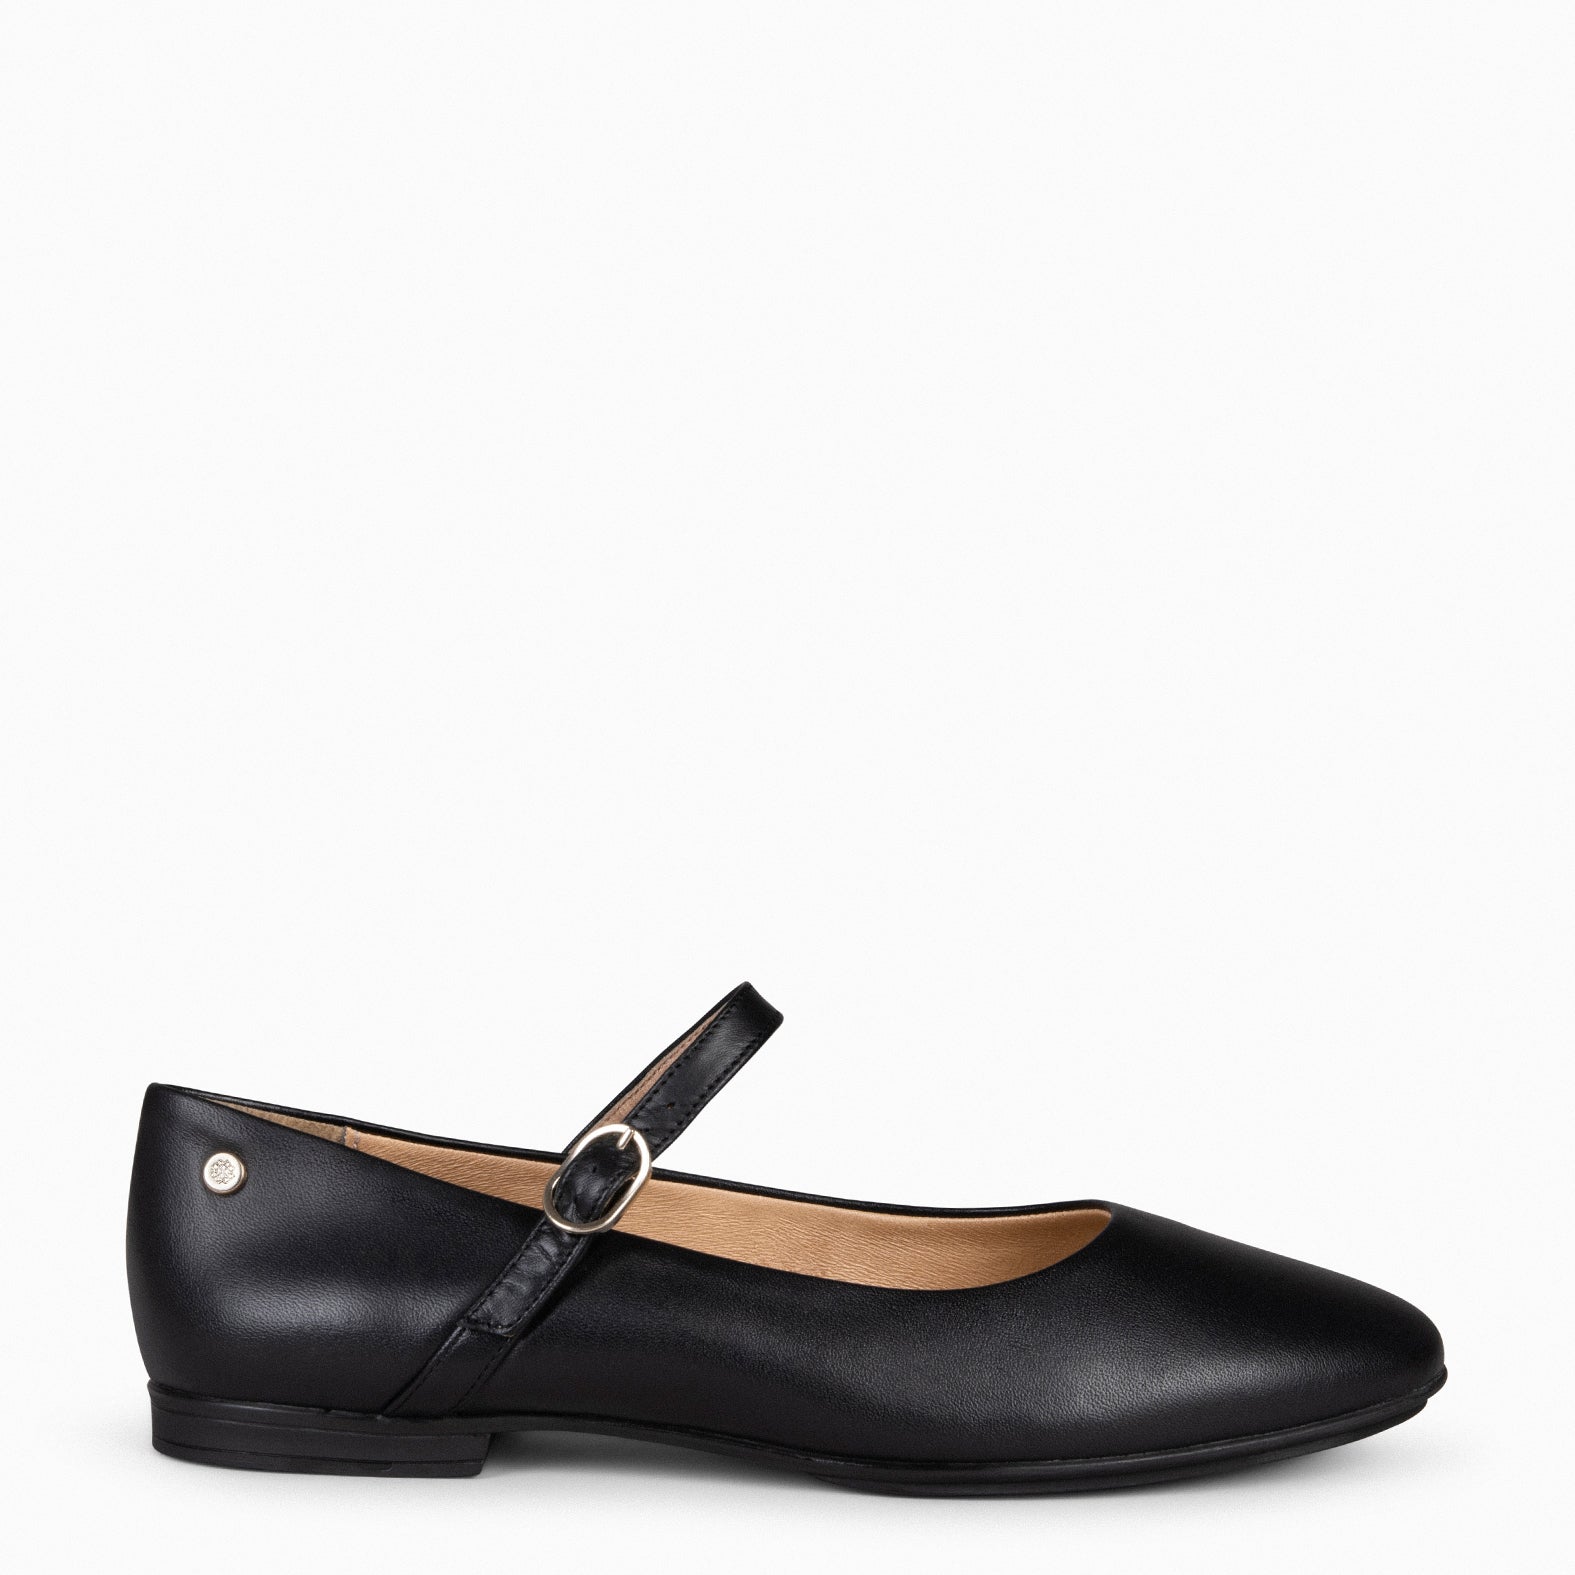 ROSALIE – BLACK rounded toe Mary-Janes